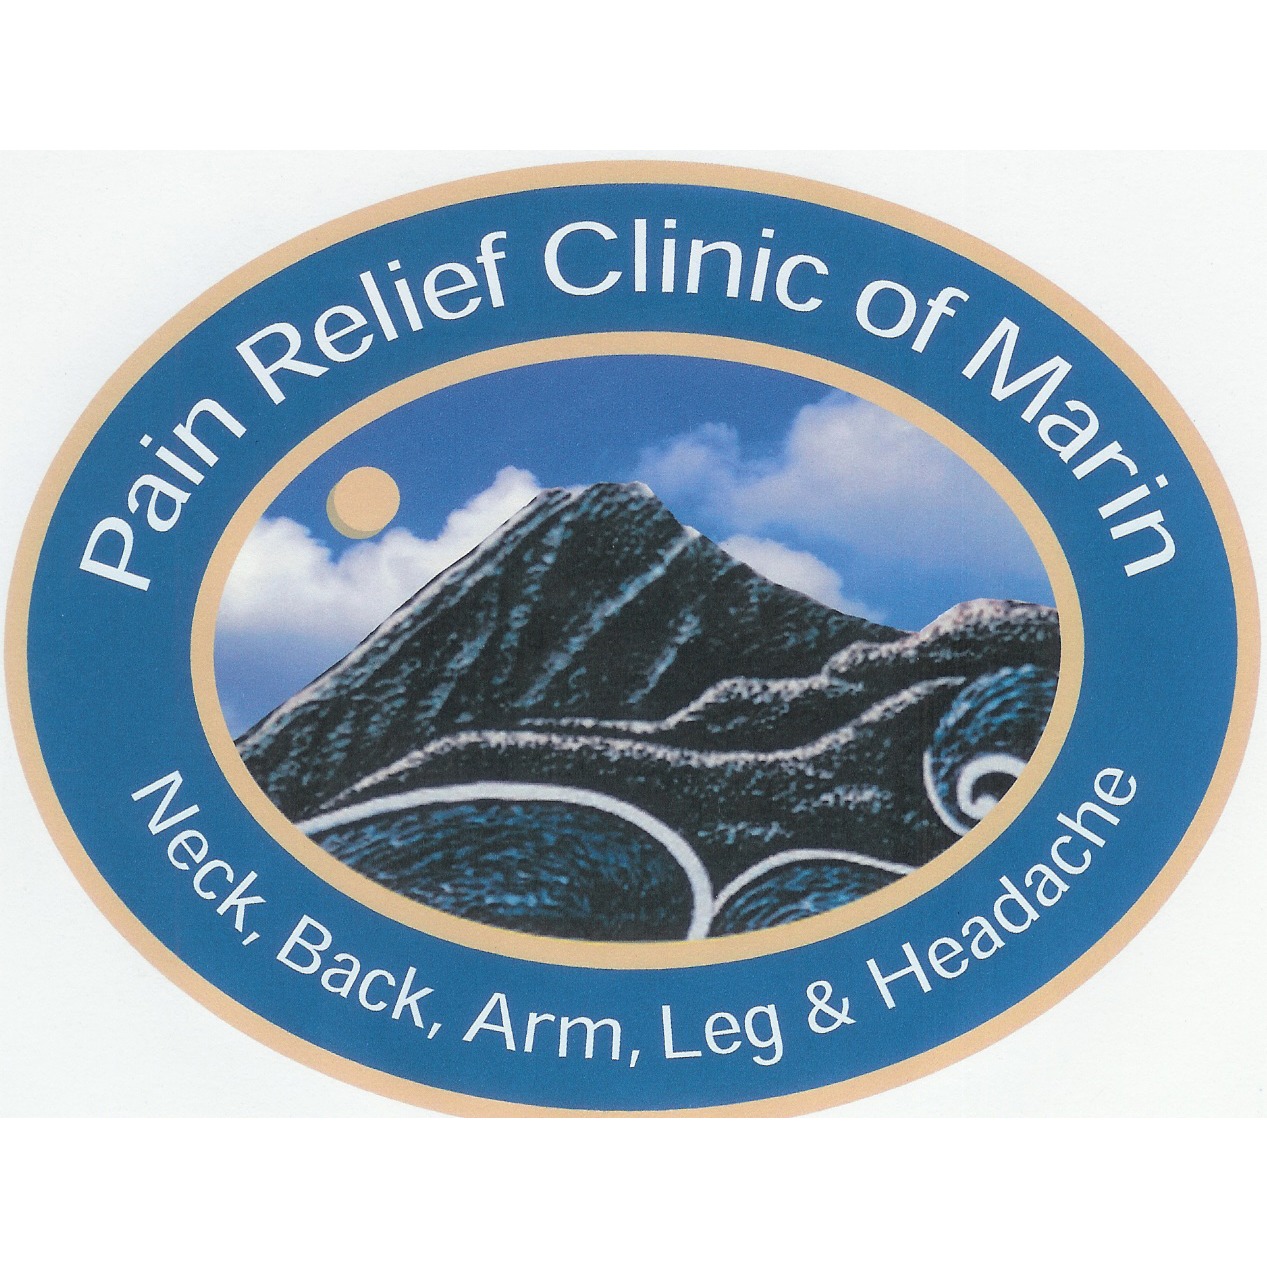 Neck, Back, Arm, Leg and Headache Pain Relief Clinic of Marin Logo